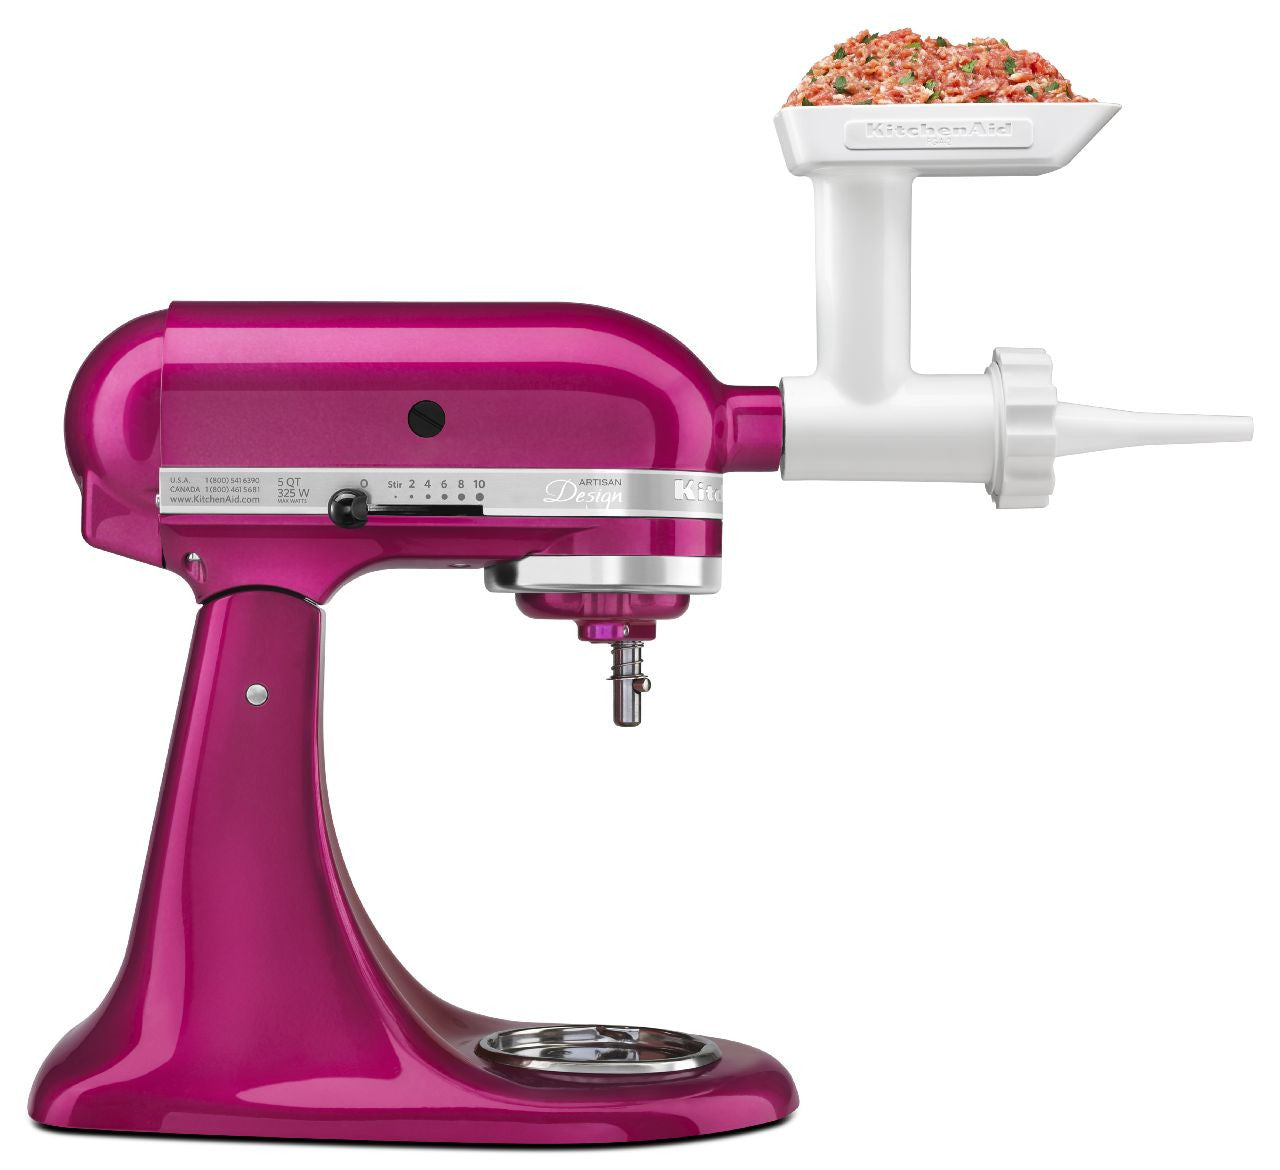 KitchenAid Kitchenaid KSM155GB Artisan Design Tilt-Head Stand Mixer 5 qt.  in Raspberry Ice Reviews 2023